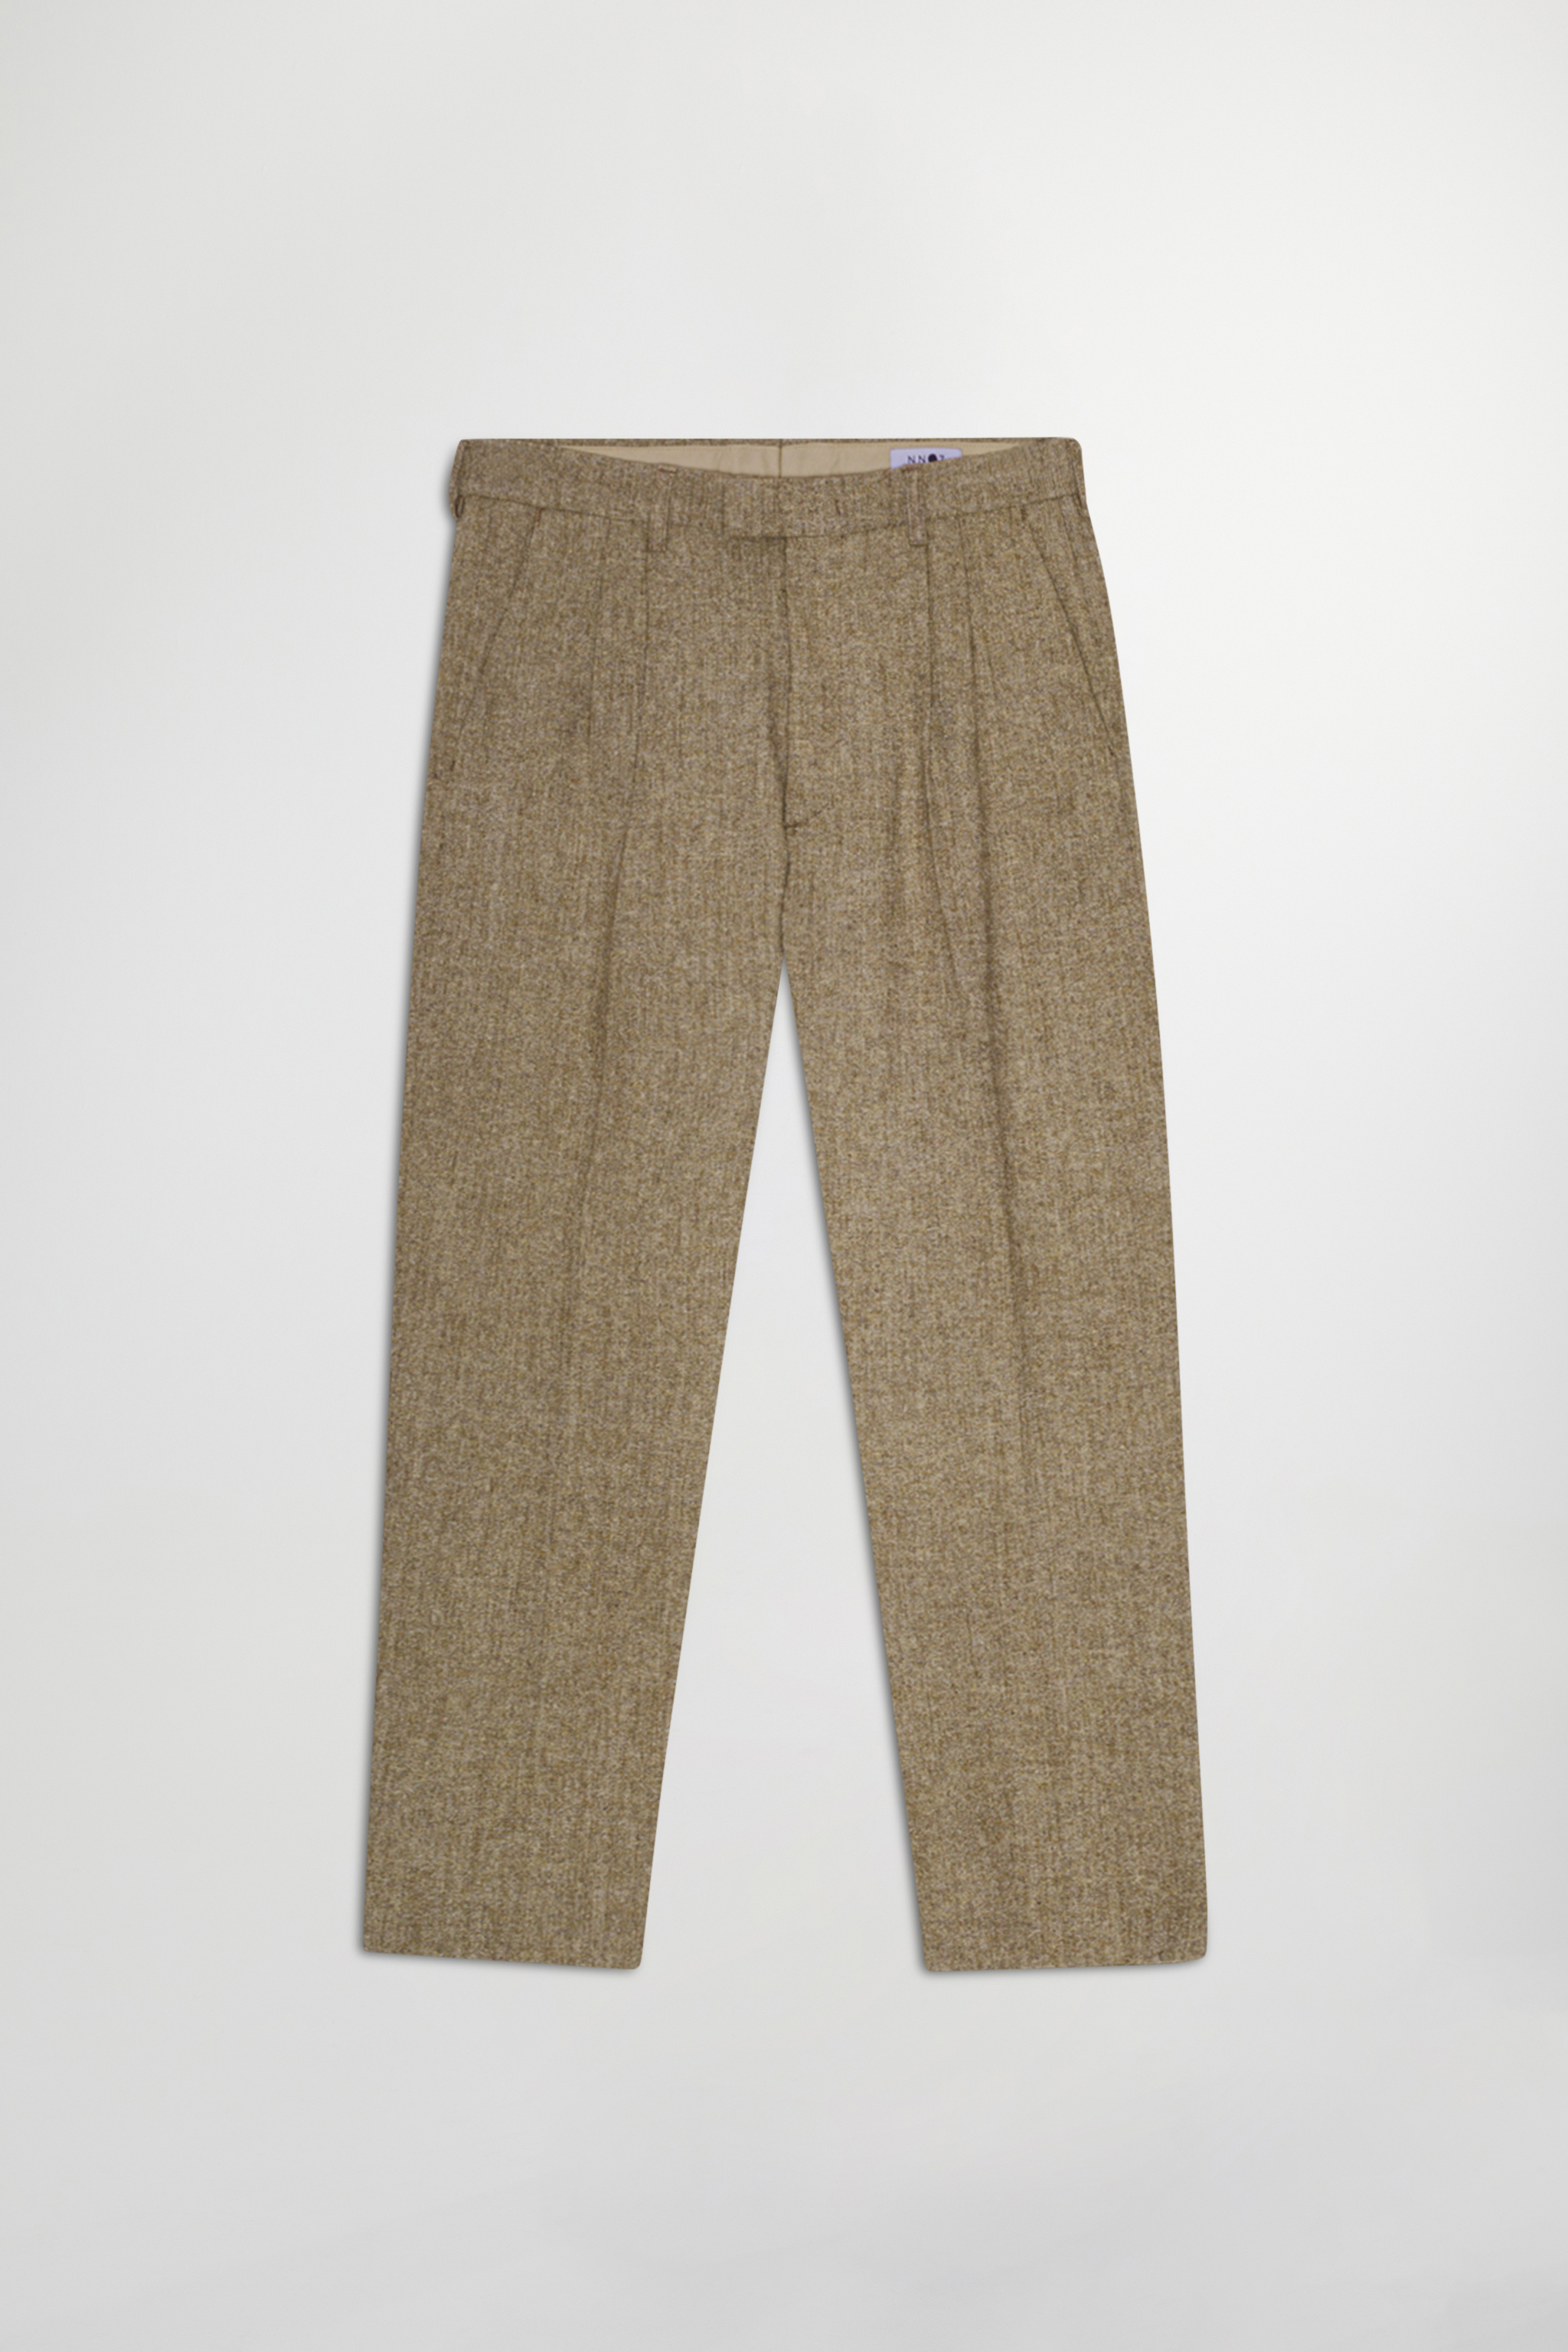 Fritz 1717 men's trousers - Brown Melange #803 - Buy online at NN.07®